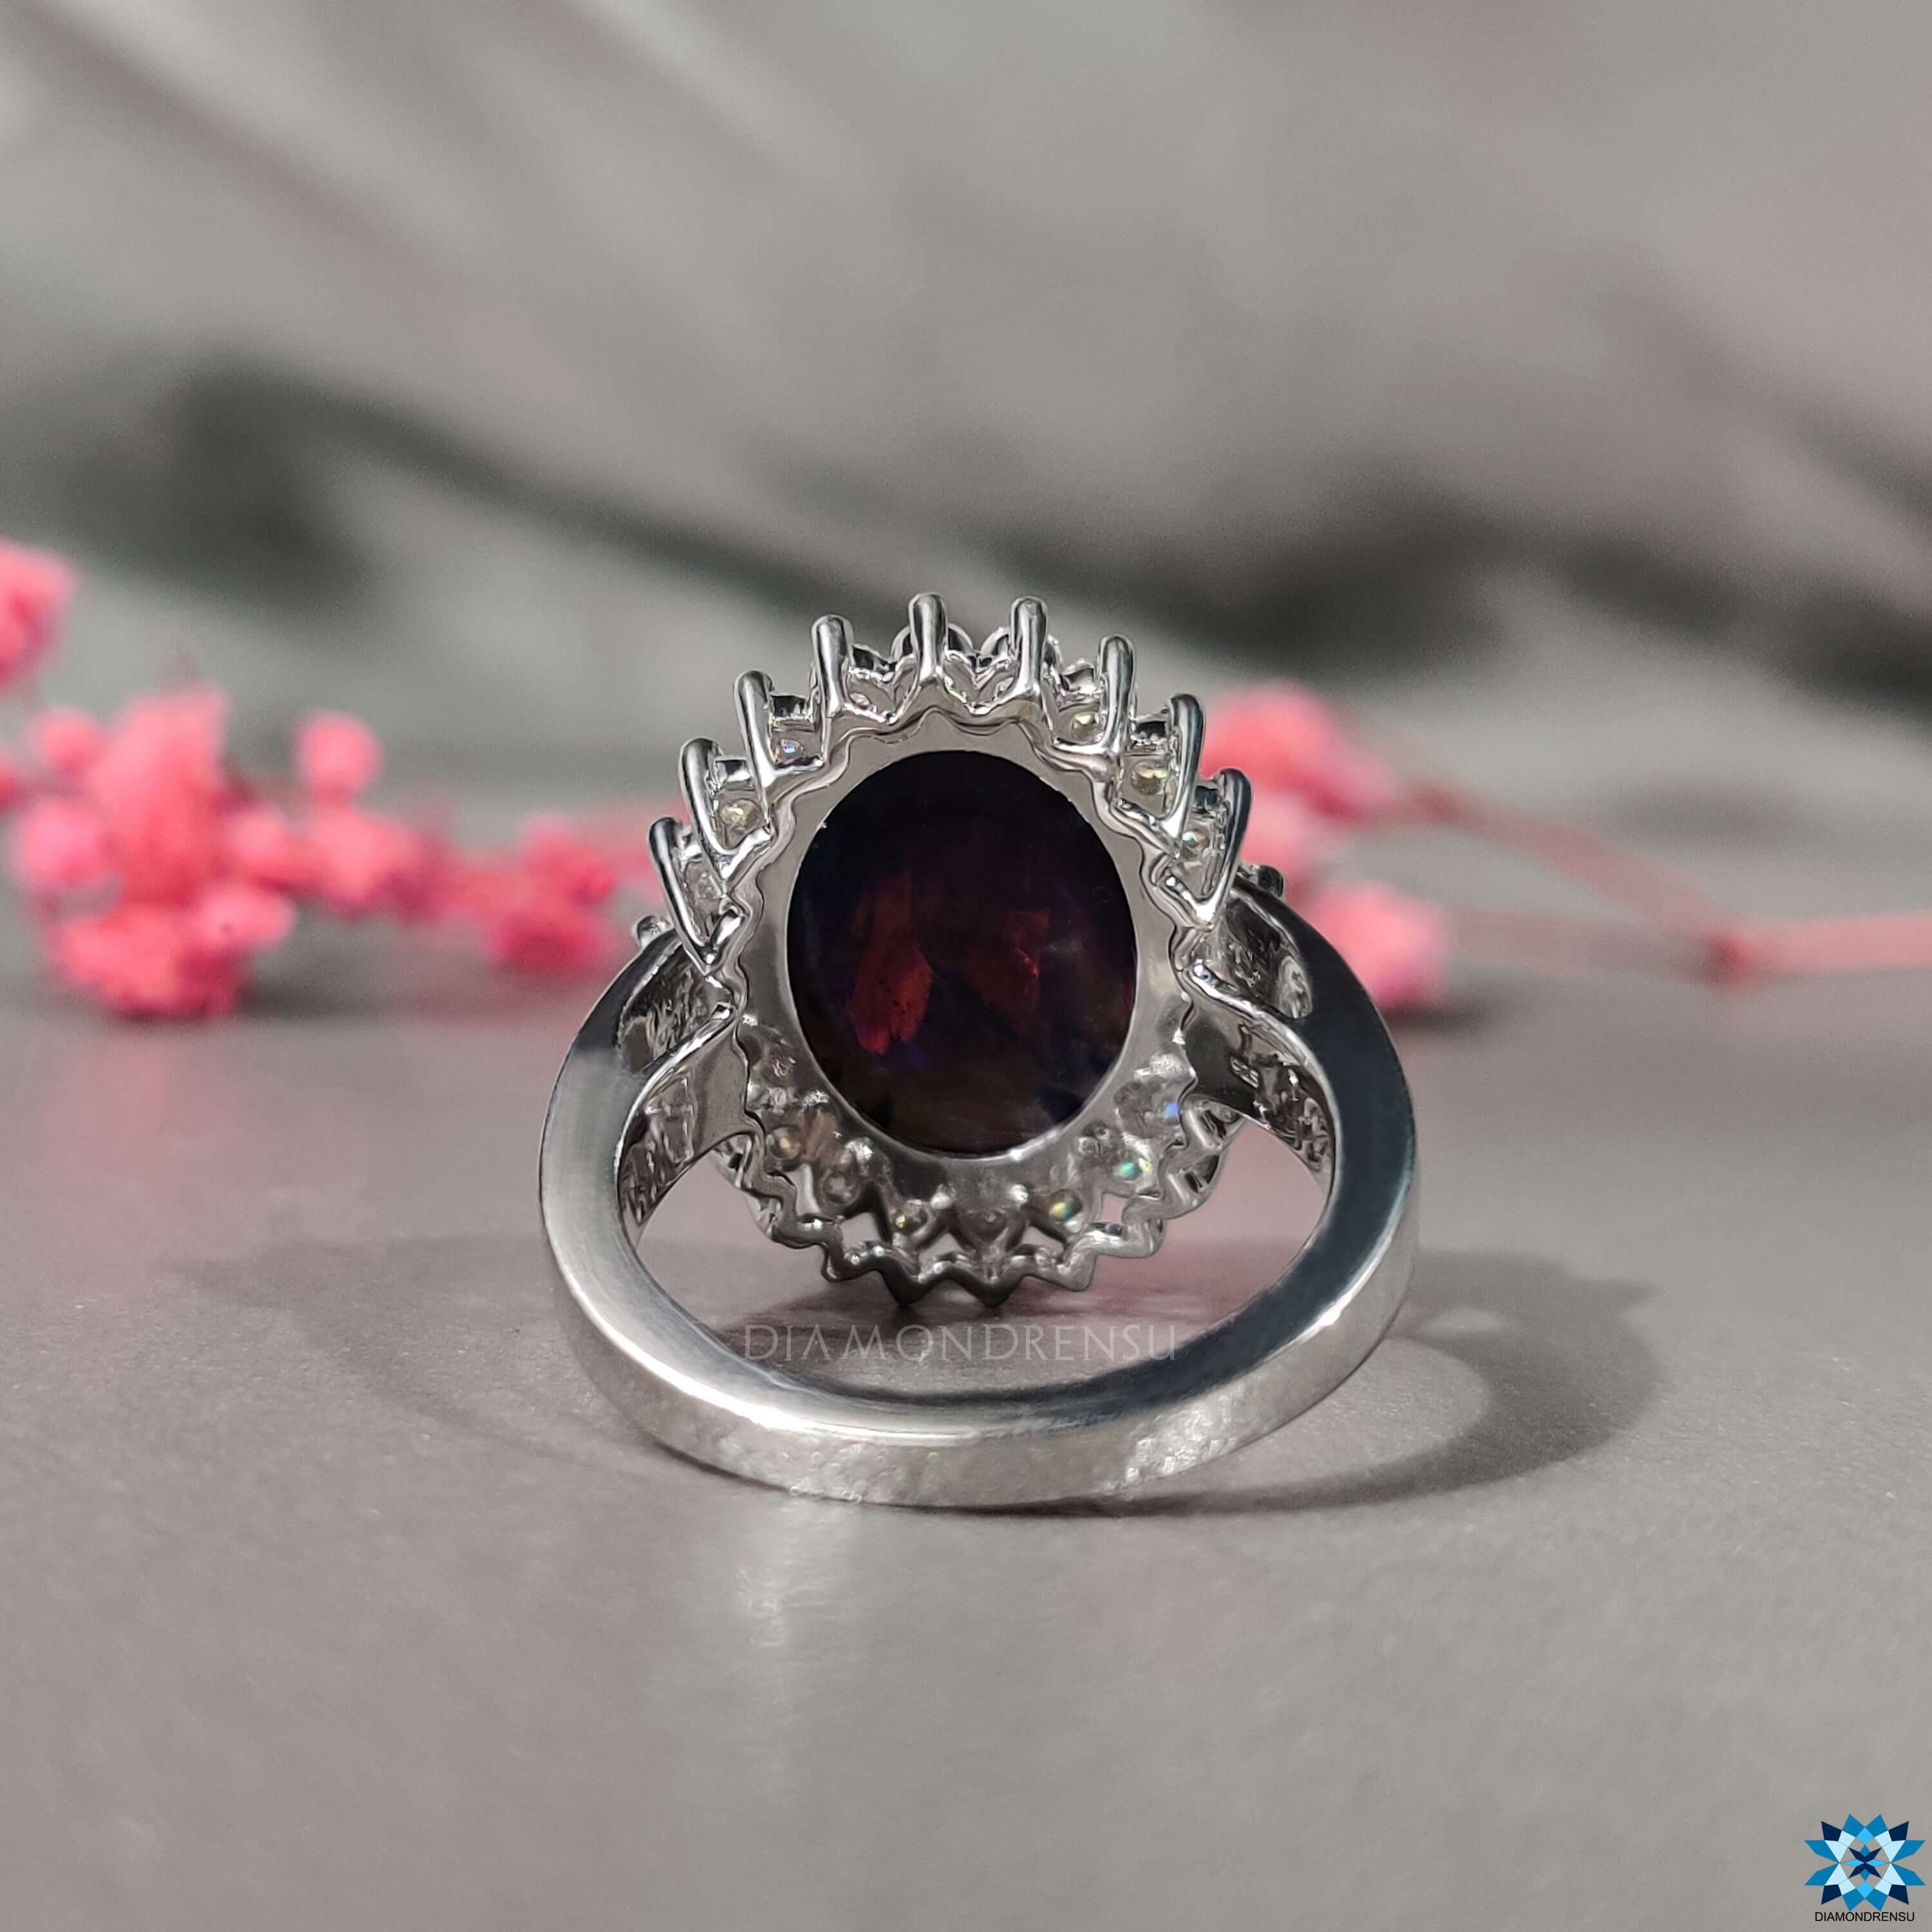 opal gemstone ring - diamondrensu